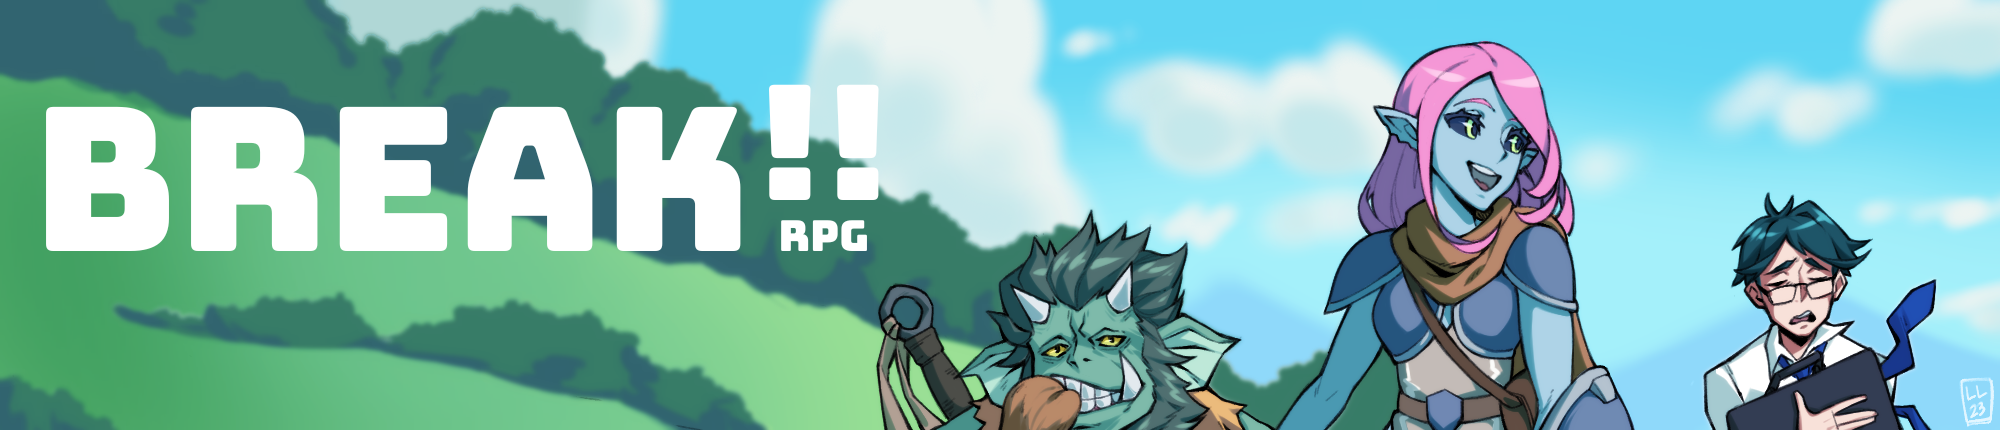 BREAK!! RPG banner by @levilagoon on Discord